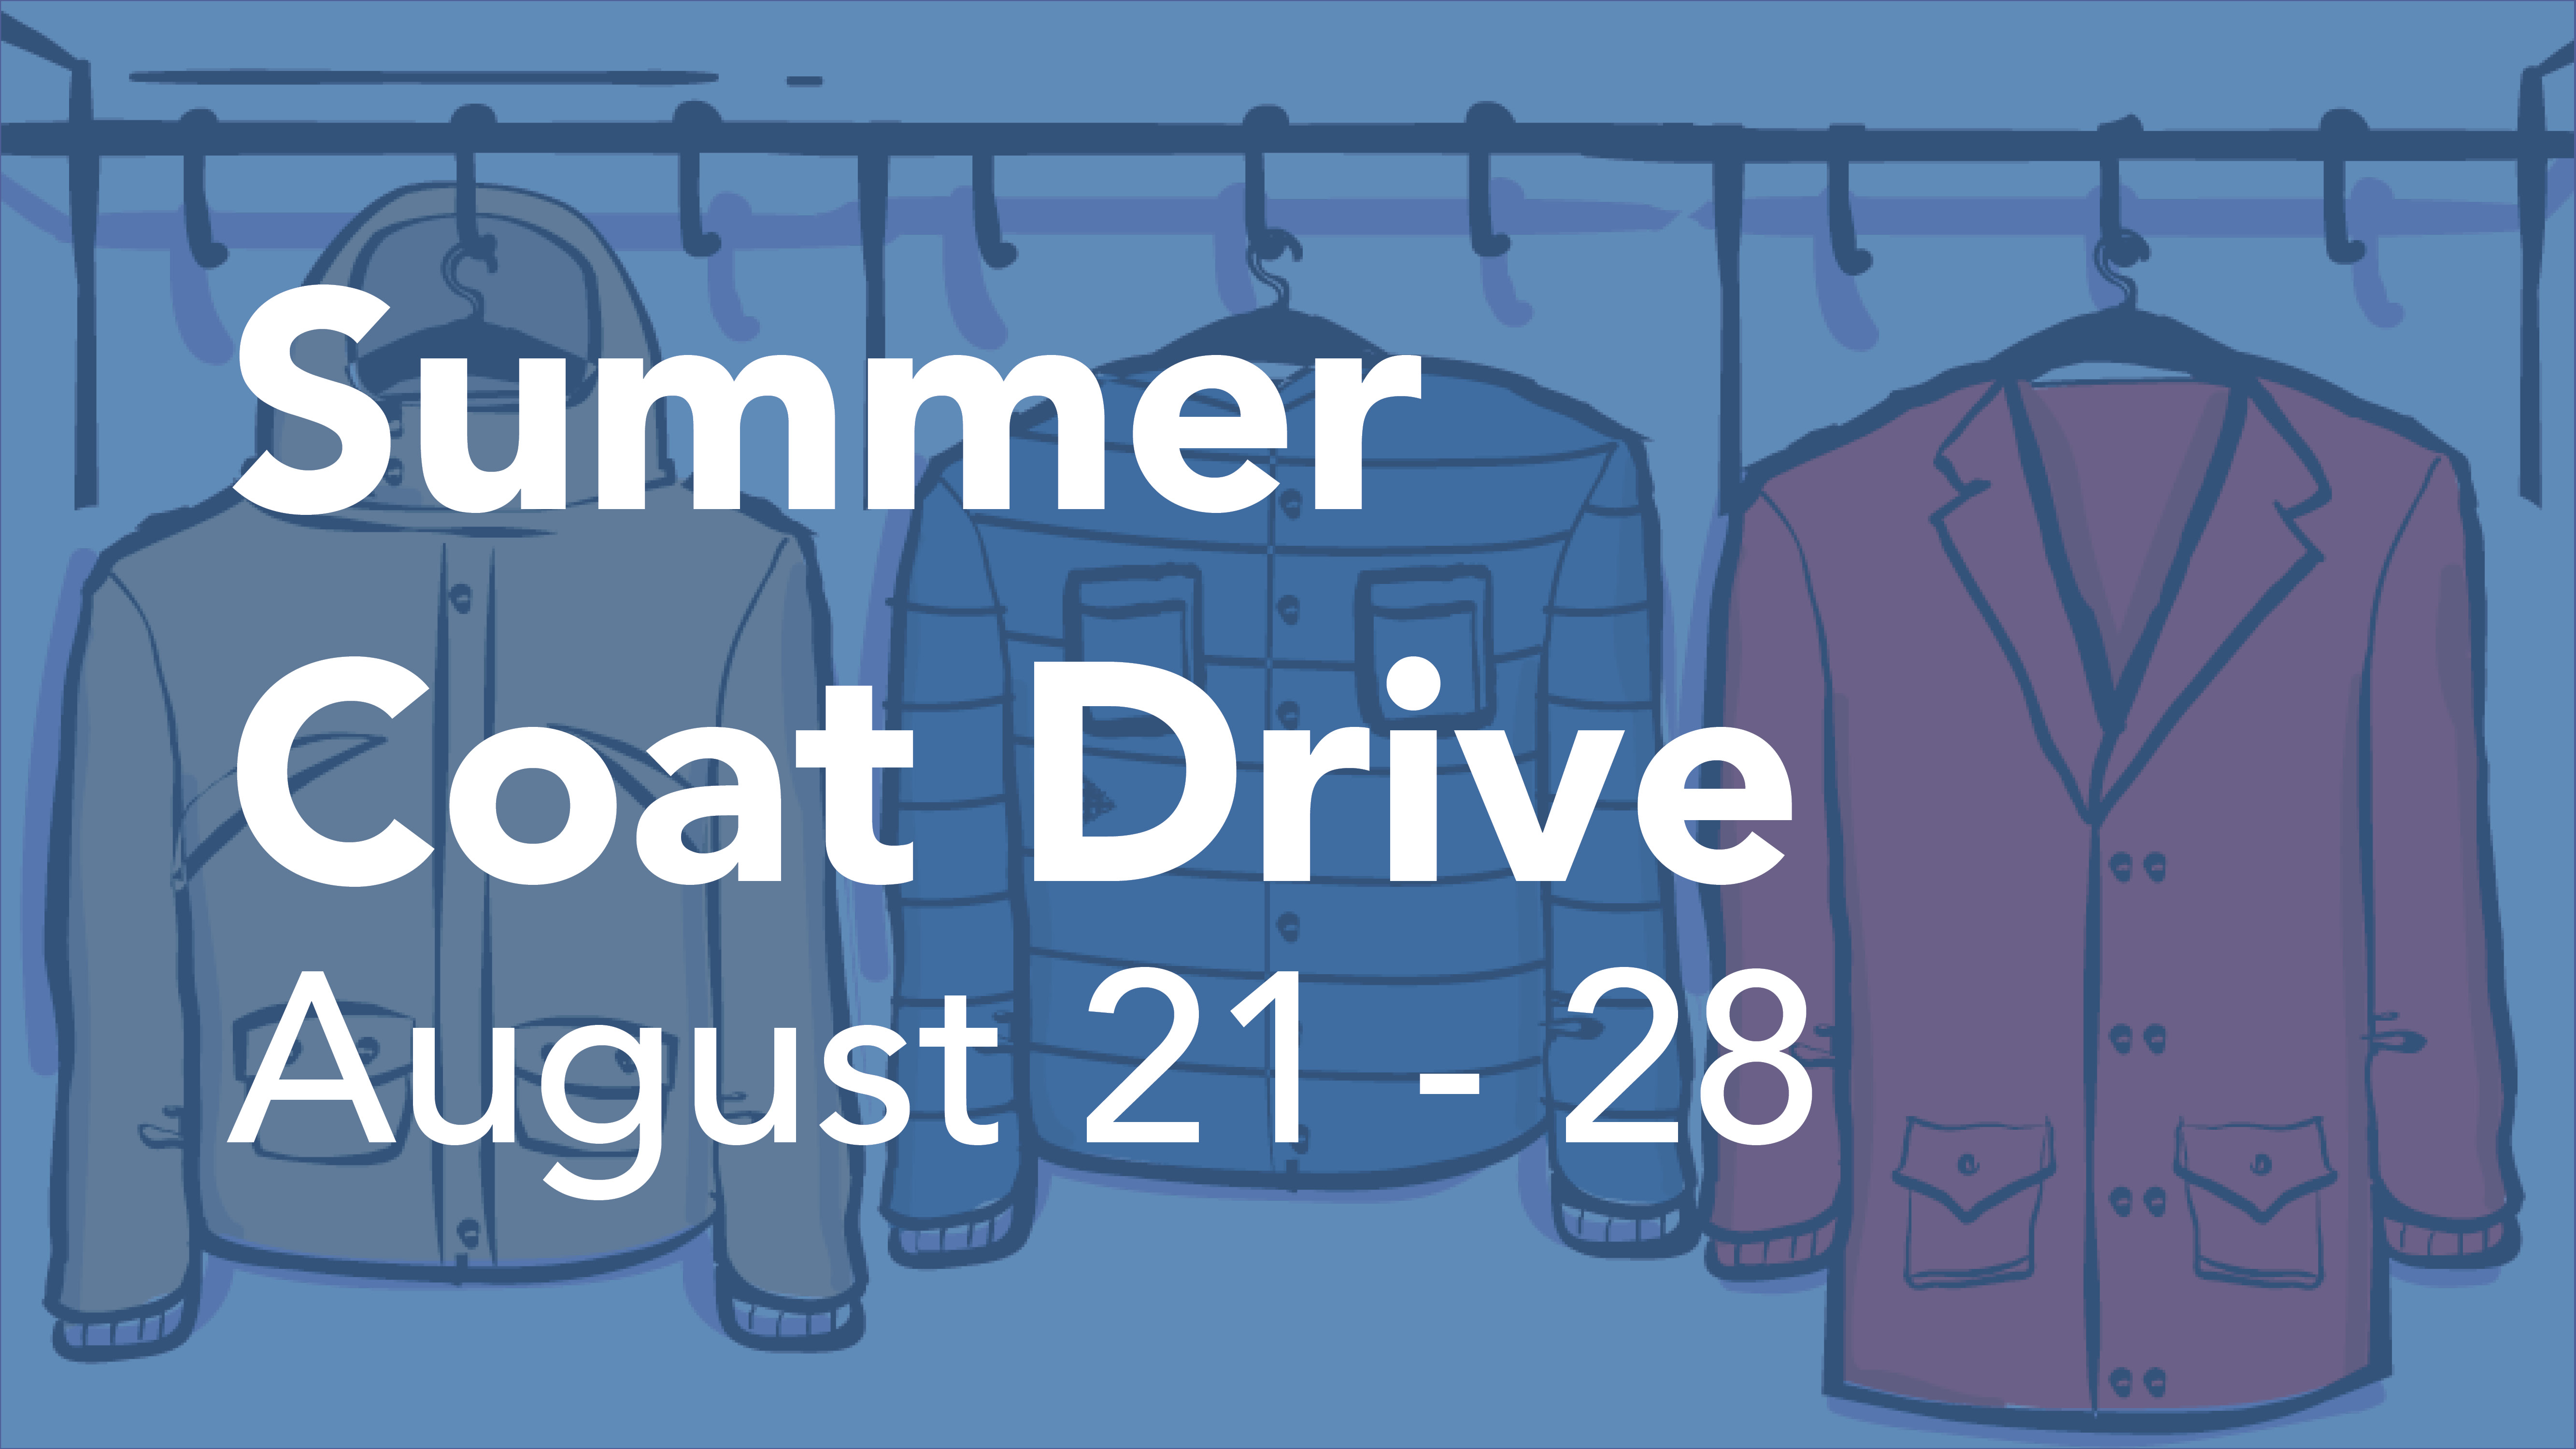 Announcement slide - Summer Coat Drive